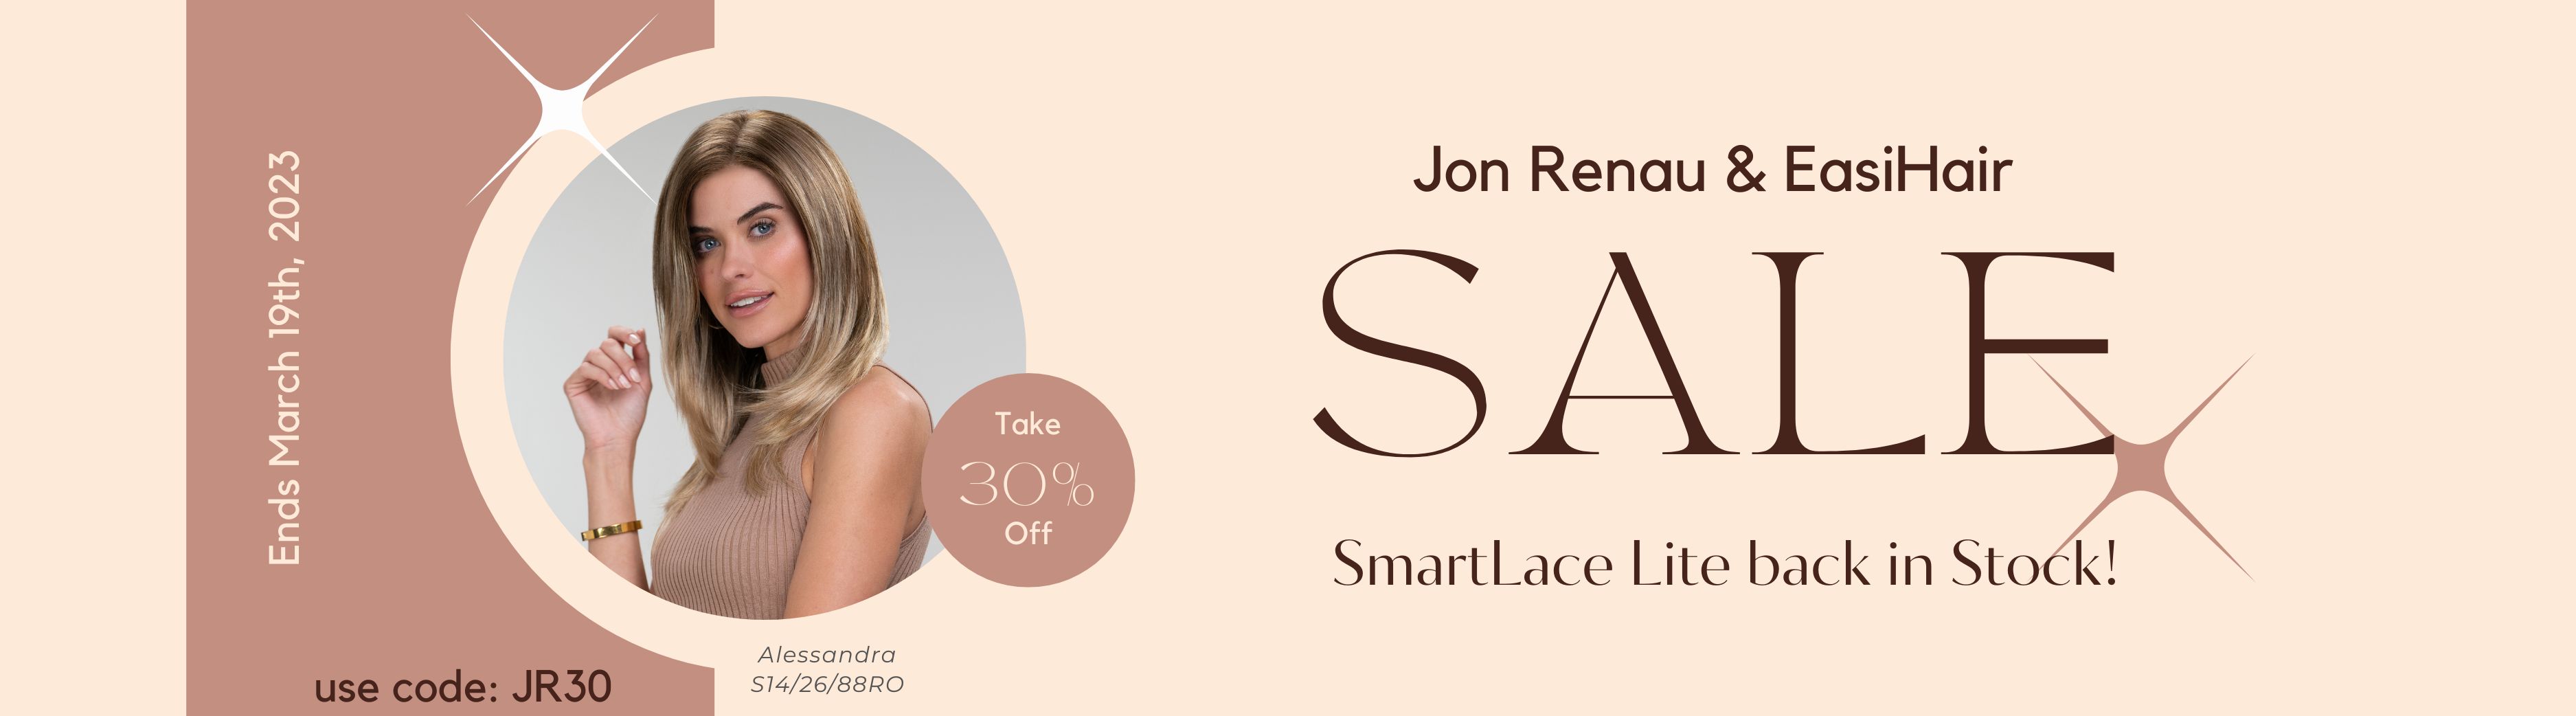 Joshua24.com 30% OFF JON RENAU Sale